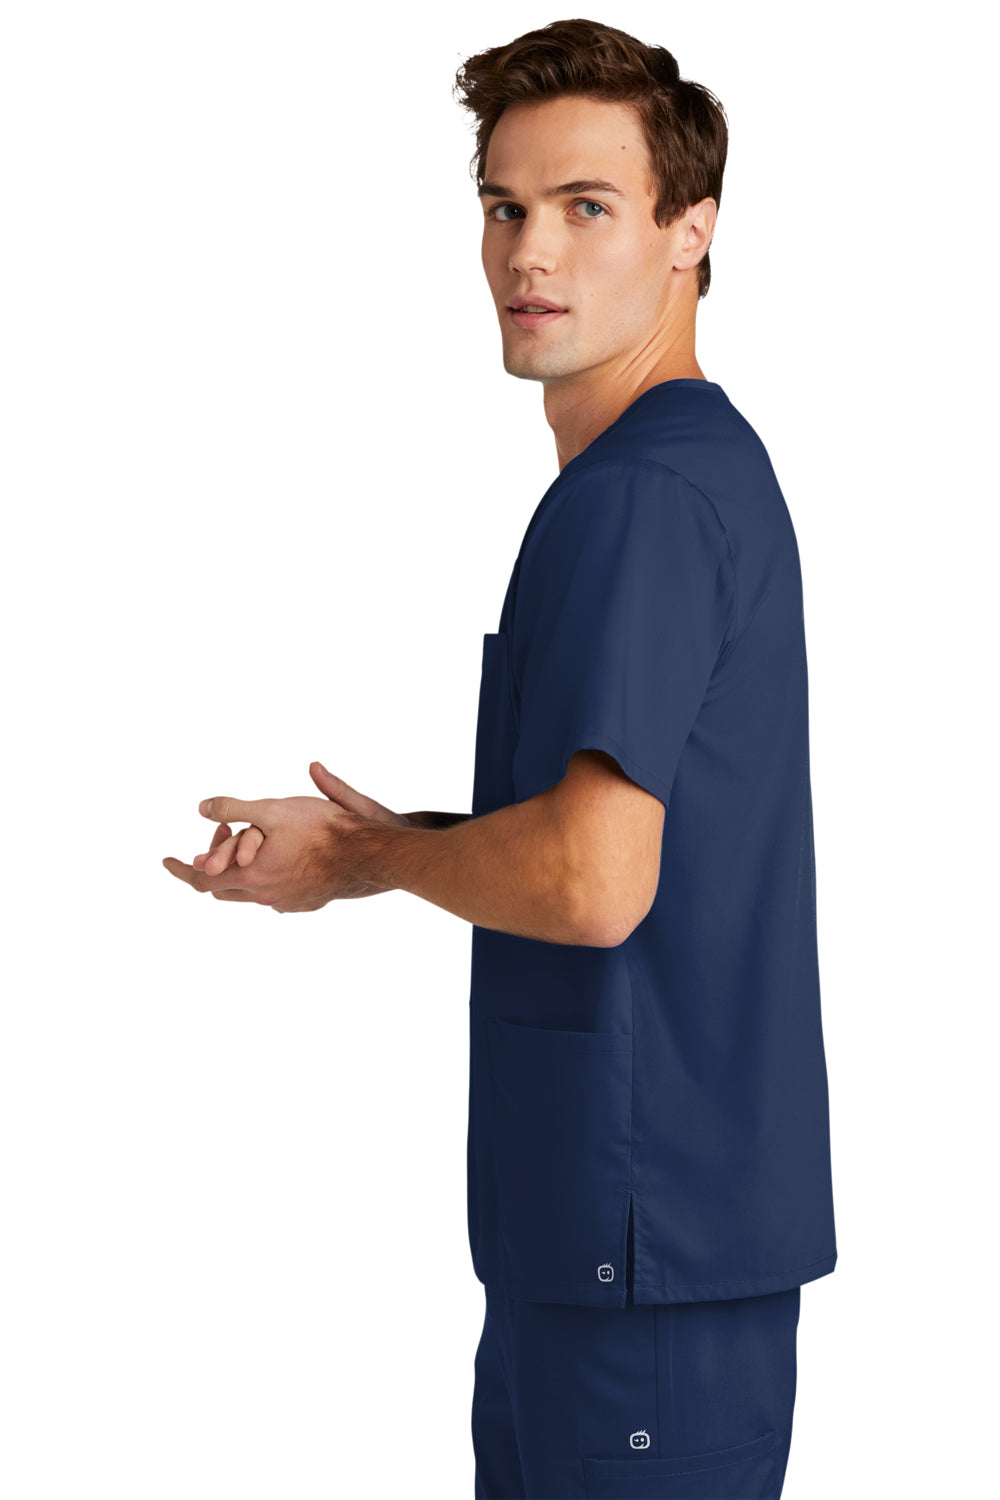 Wonderwink WW5068 Premiere Flex Short Sleeve V-Neck Shirt Navy Blue Side